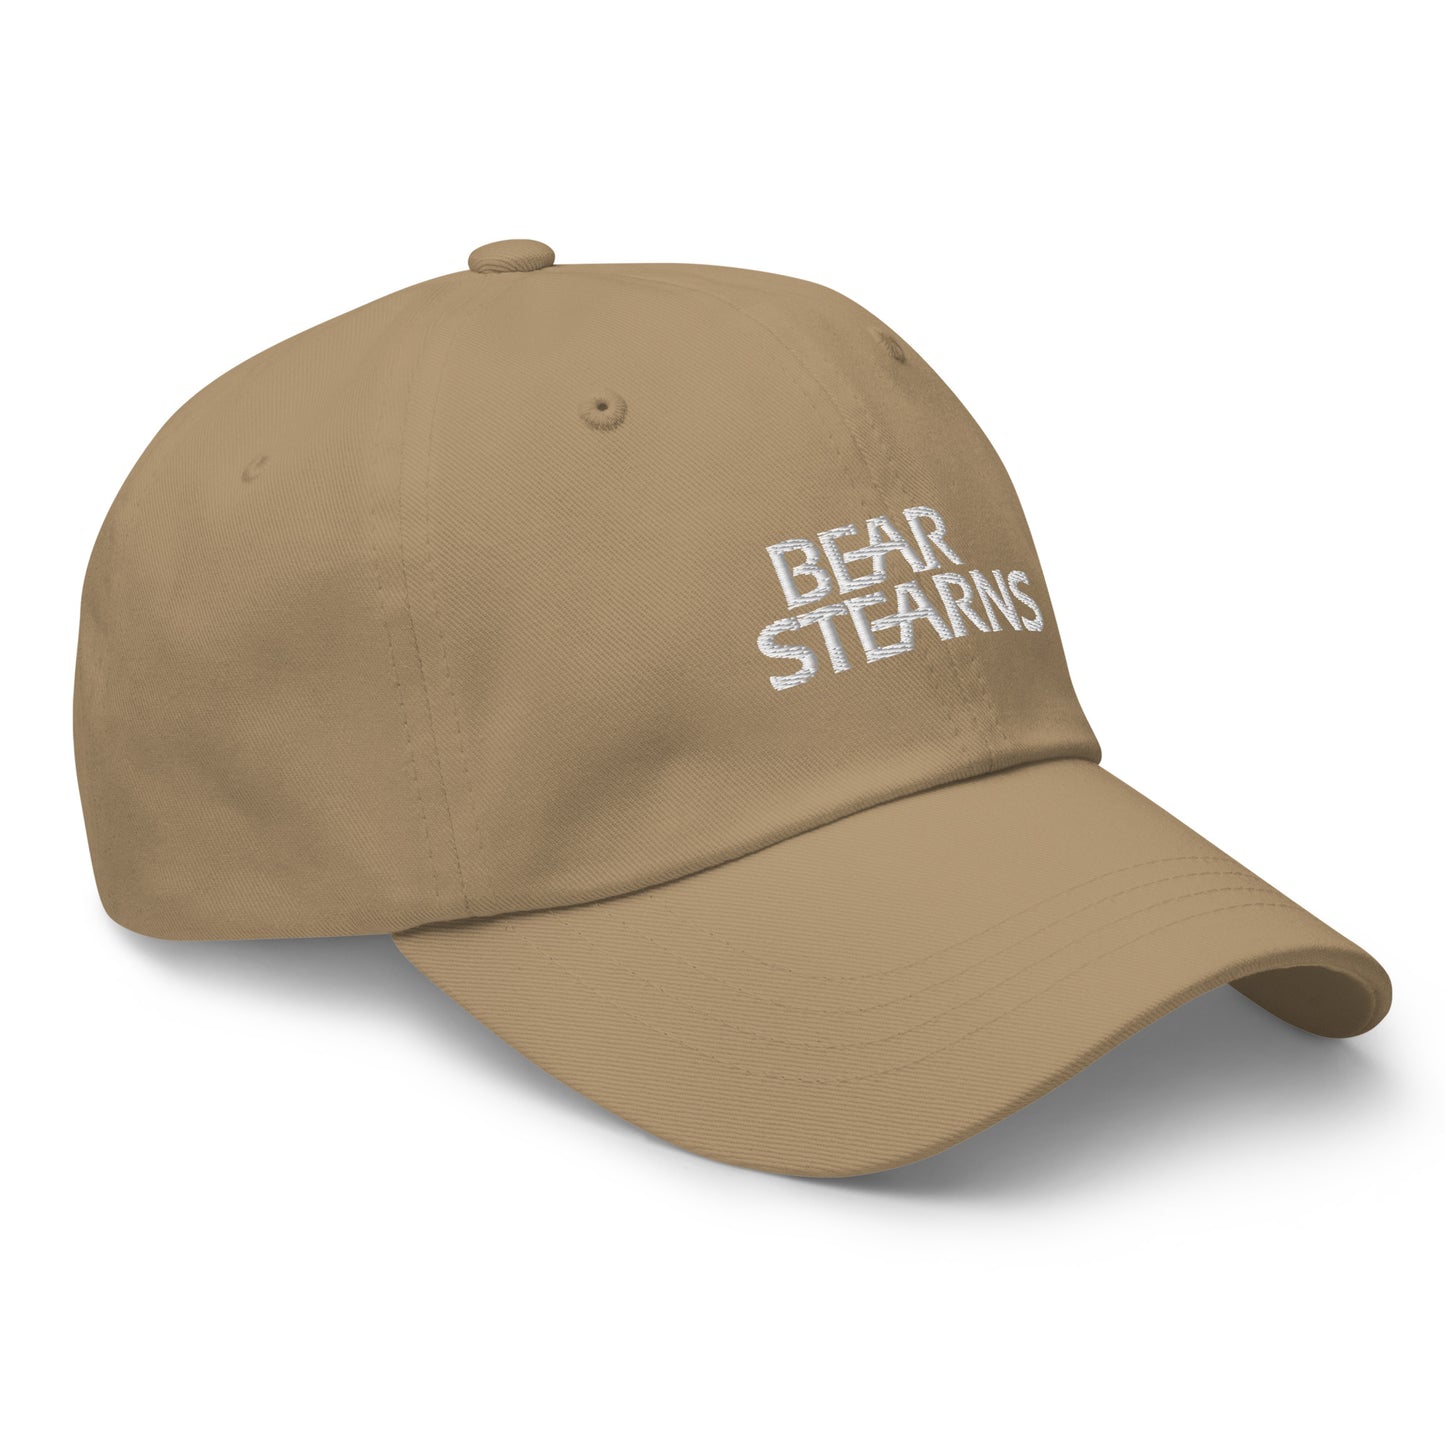 Bear Stearns Cap